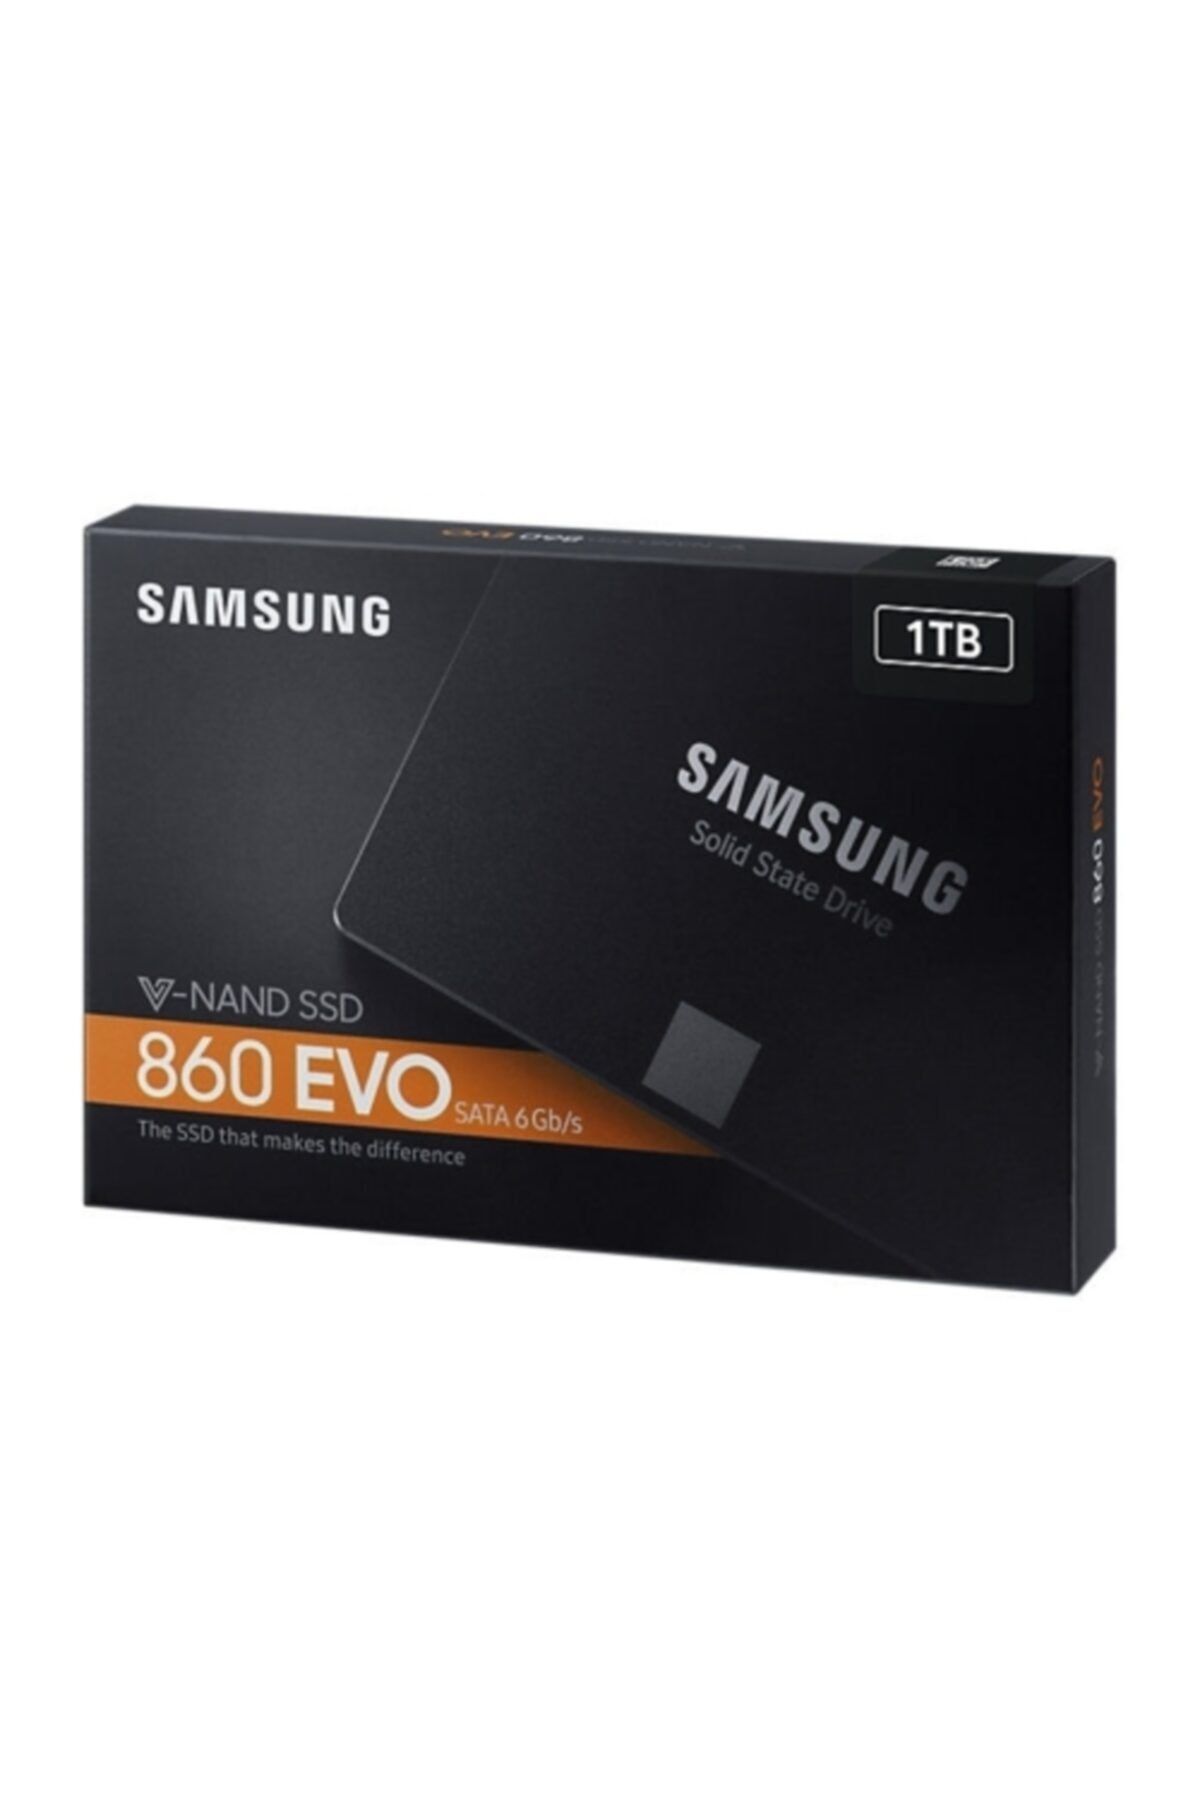 Samsung 860 Evo 1TB Sata 3 SSD Disk MZ-76E1T0BW